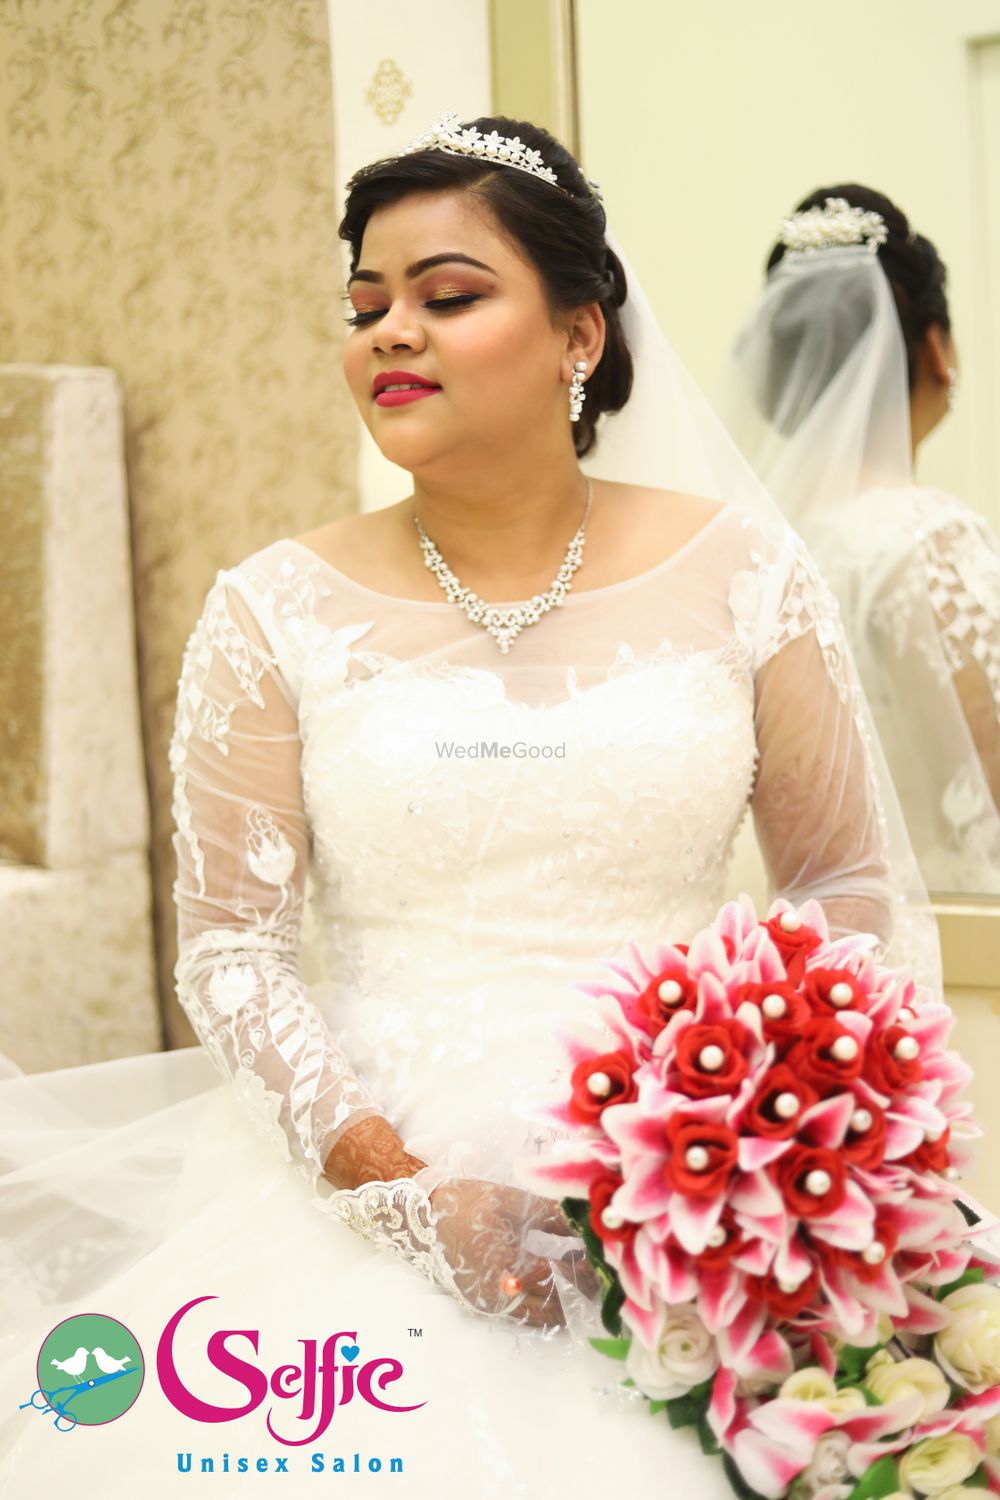 Photo From Bride 2019 - By Selfie Unisex Salon